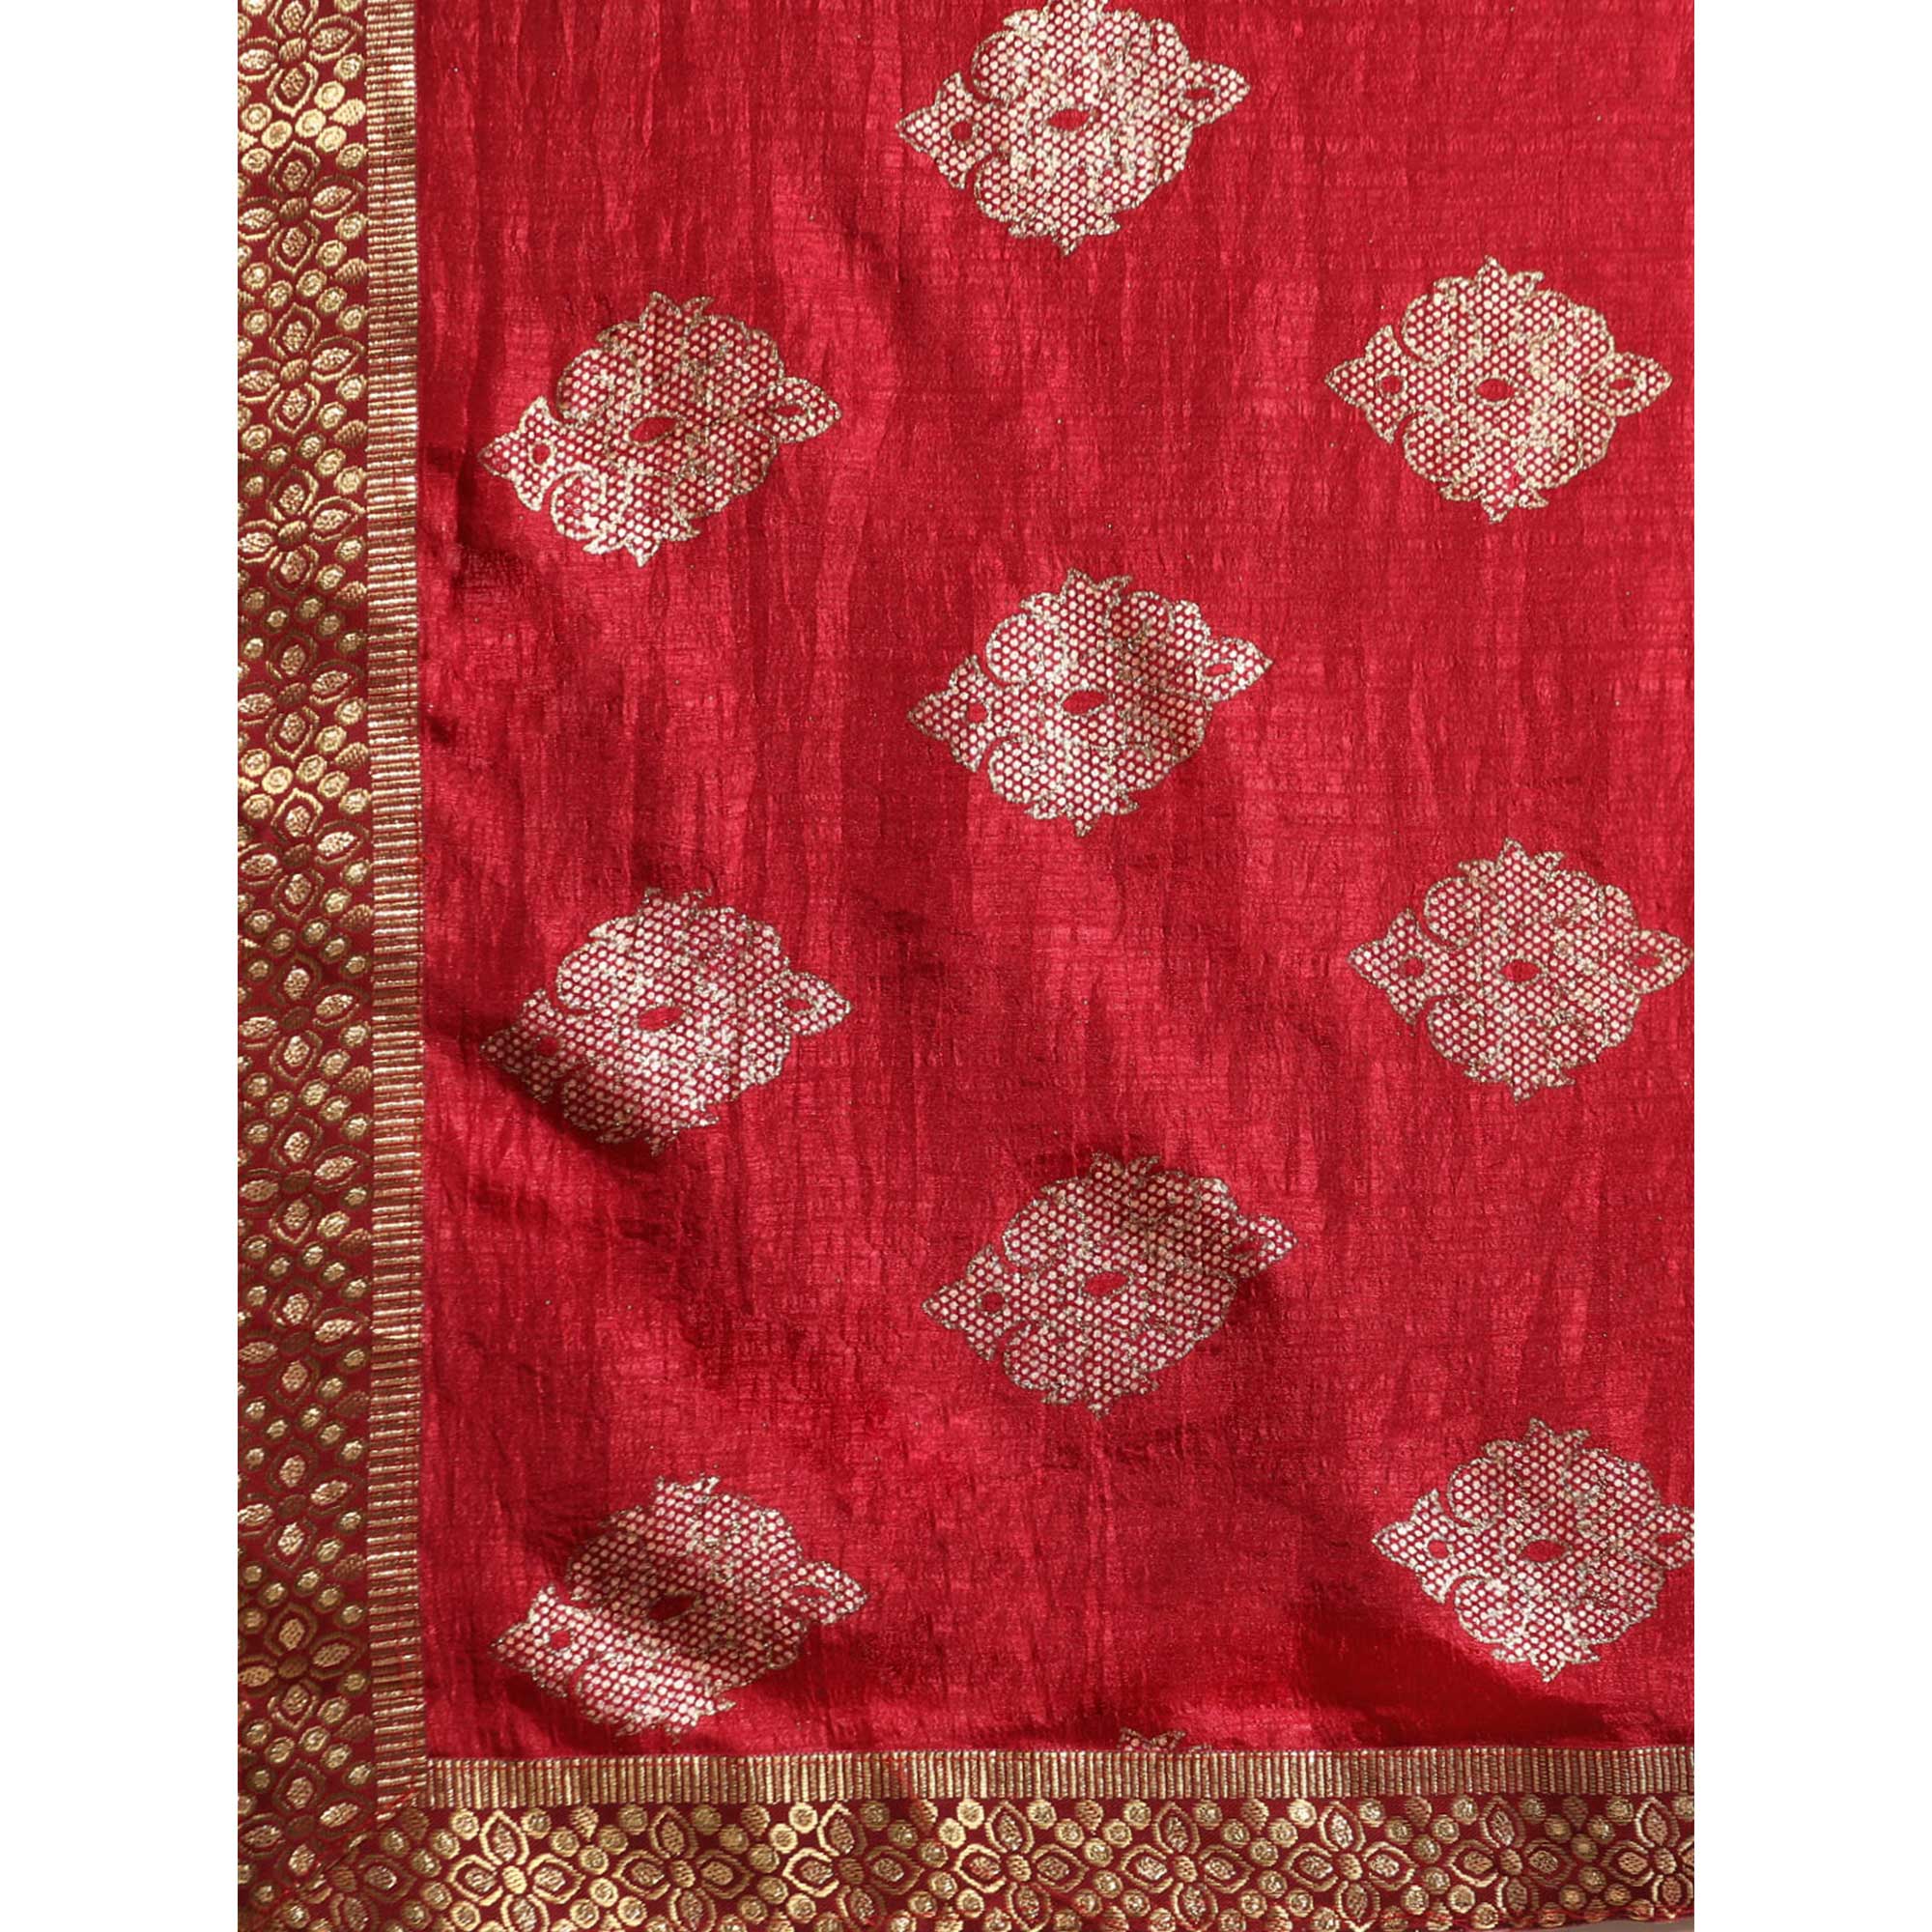 Maroon Floral Foil Printed Vichitra Silk Saree